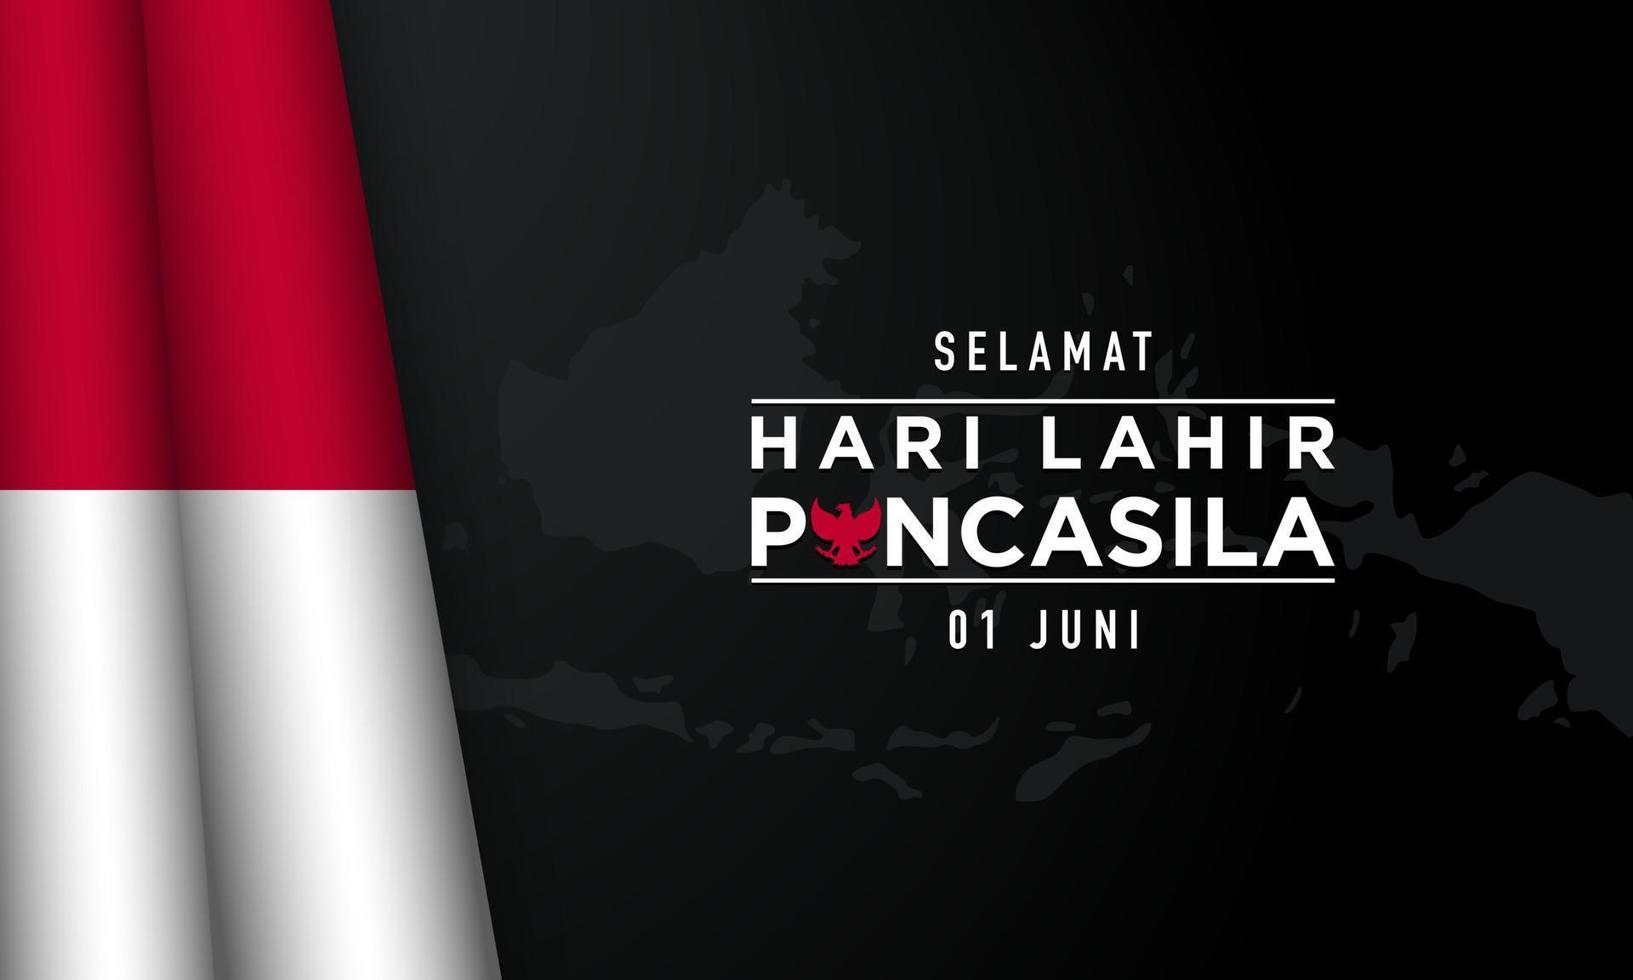 indonesischer feiertag pancasila tag illustration. vektor